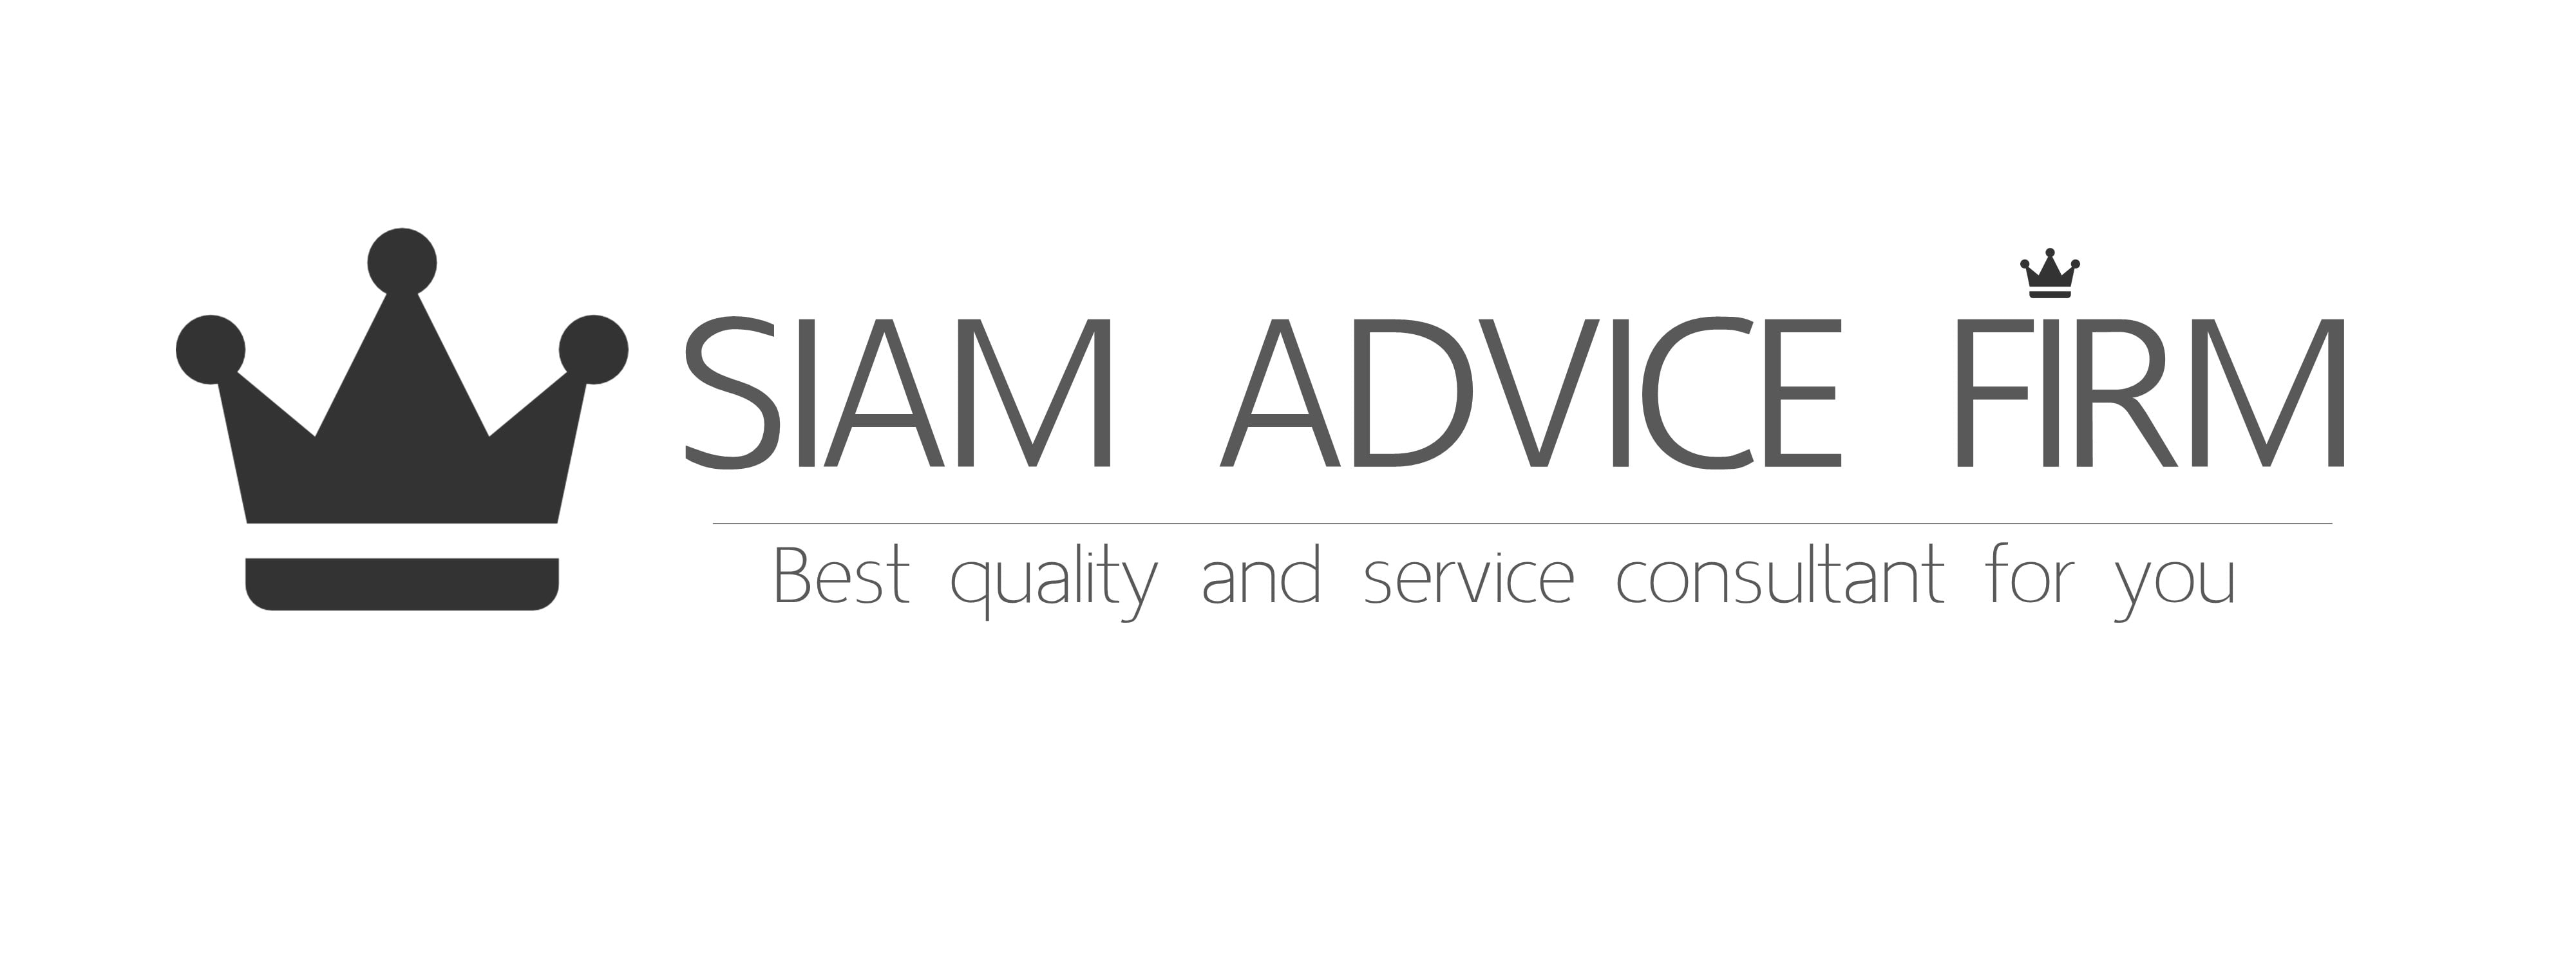 Siam Advice Firm